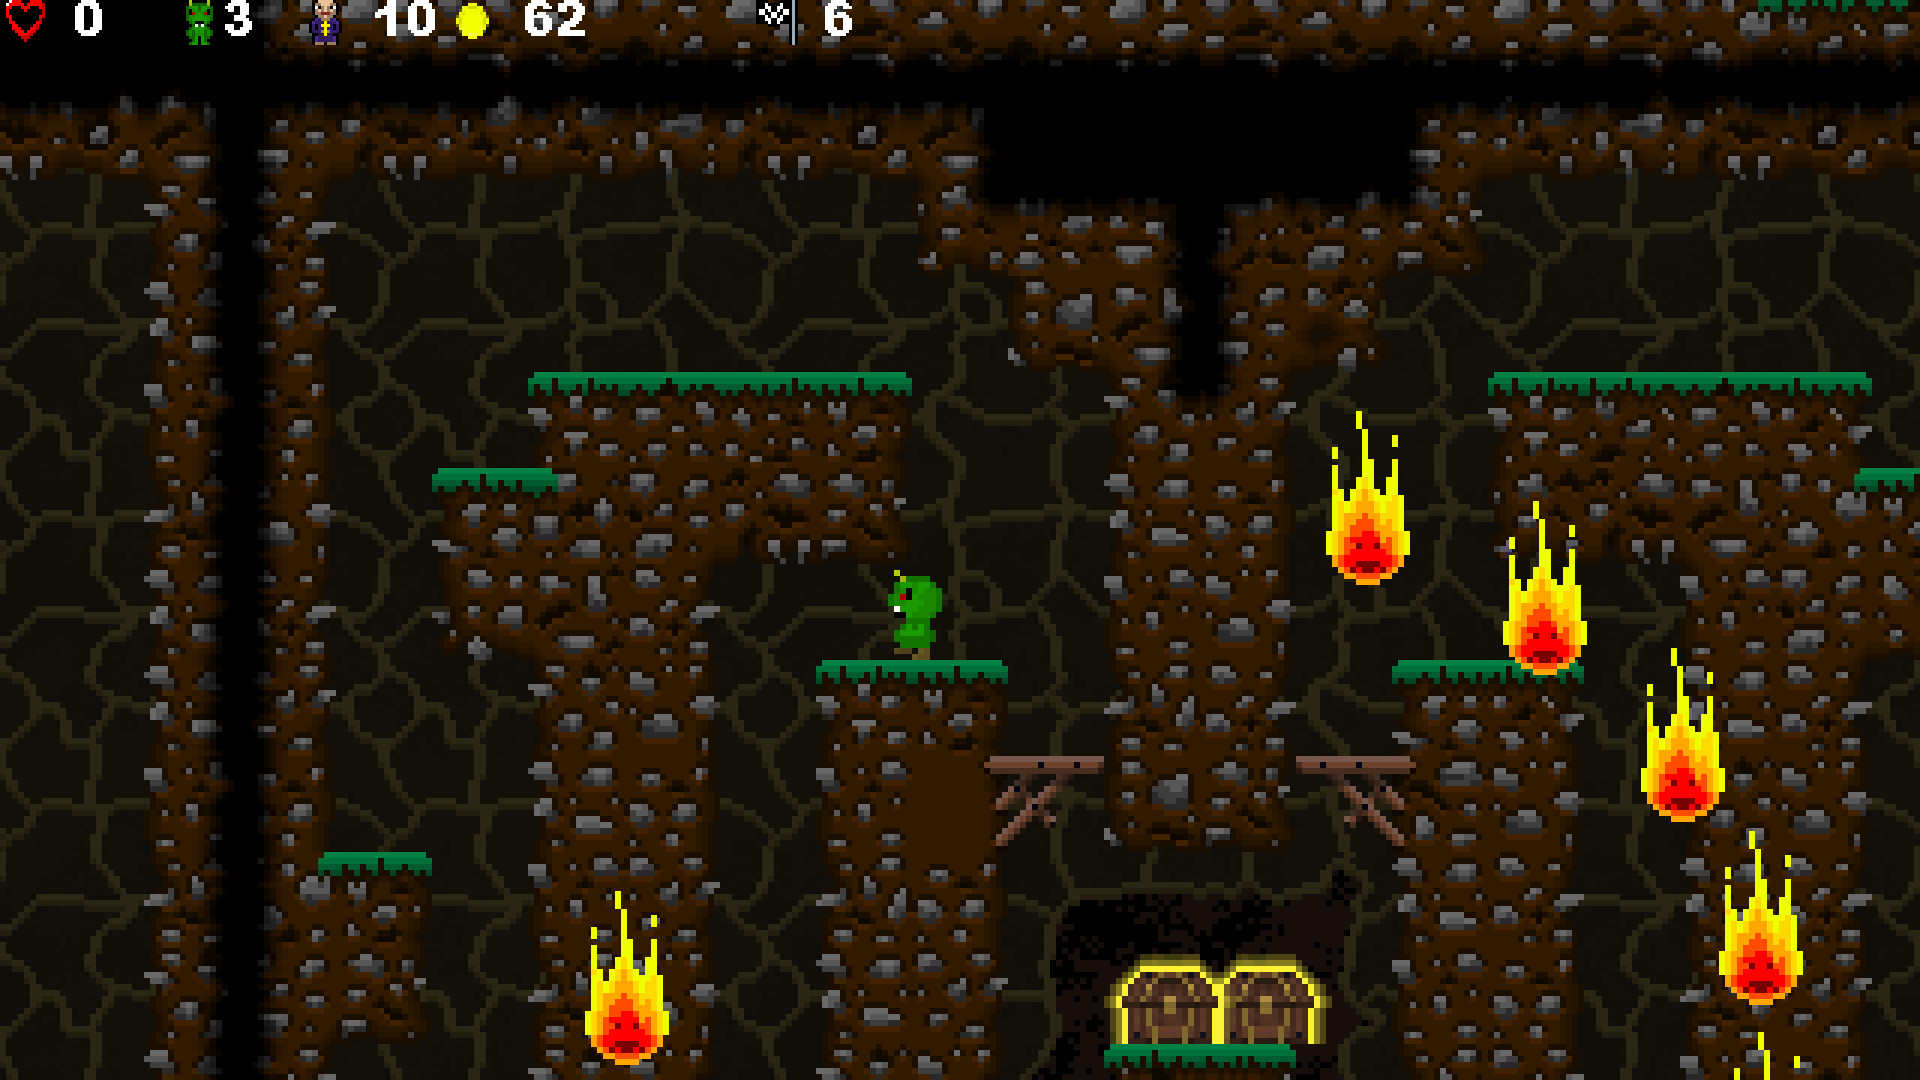 Tiny Devil Adventure screenshot